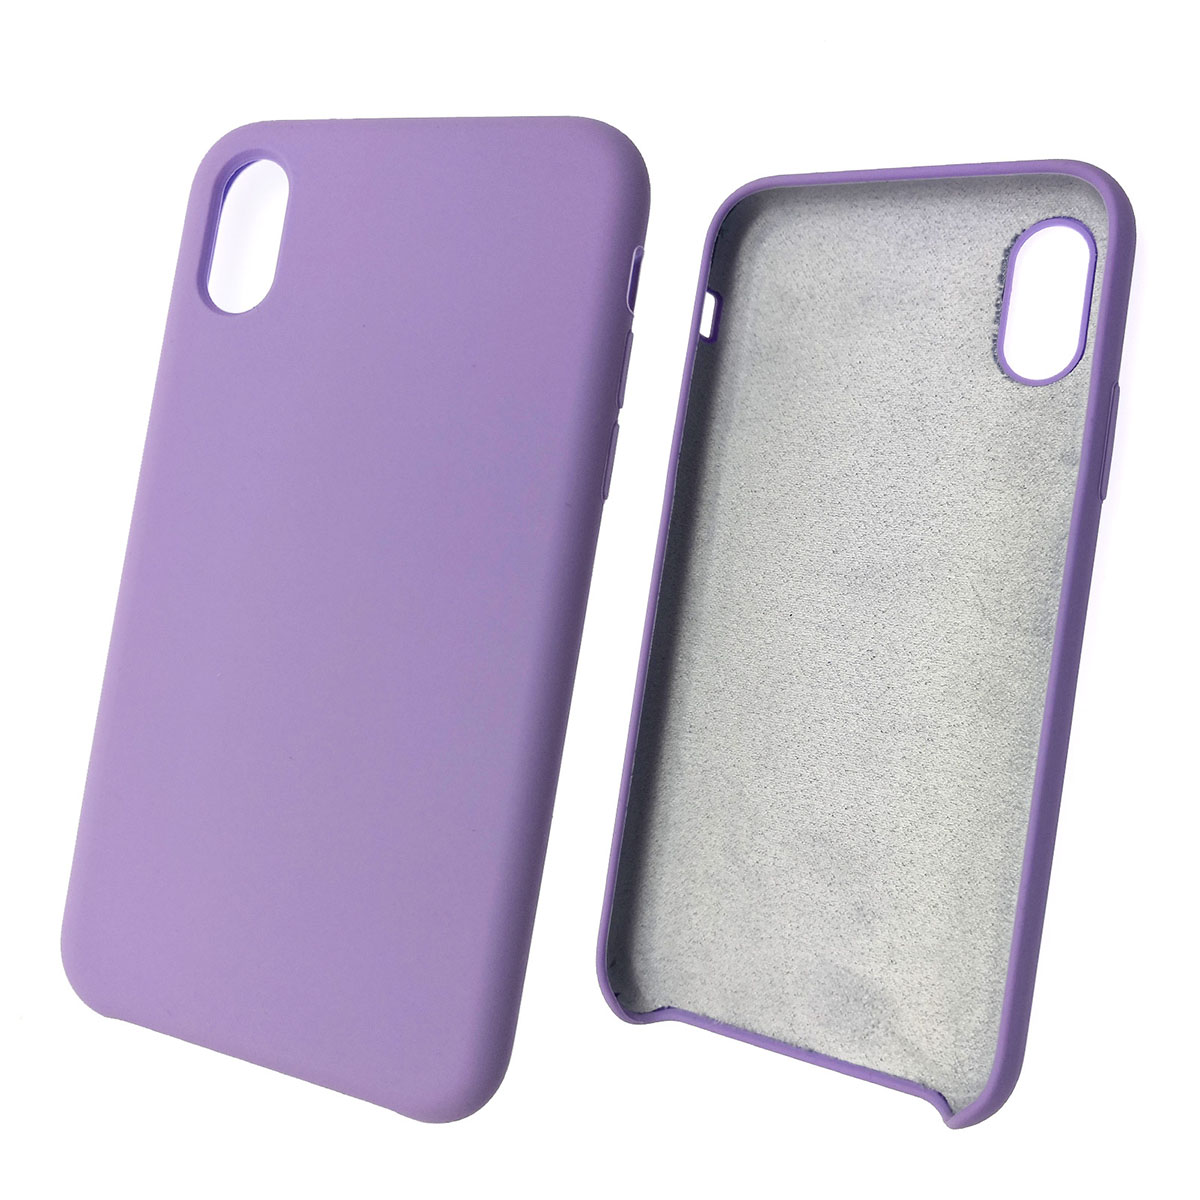 Чехол накладка Silicon Case для APPLE iPhone X, XS, силикон, бархат, цвет сиреневый